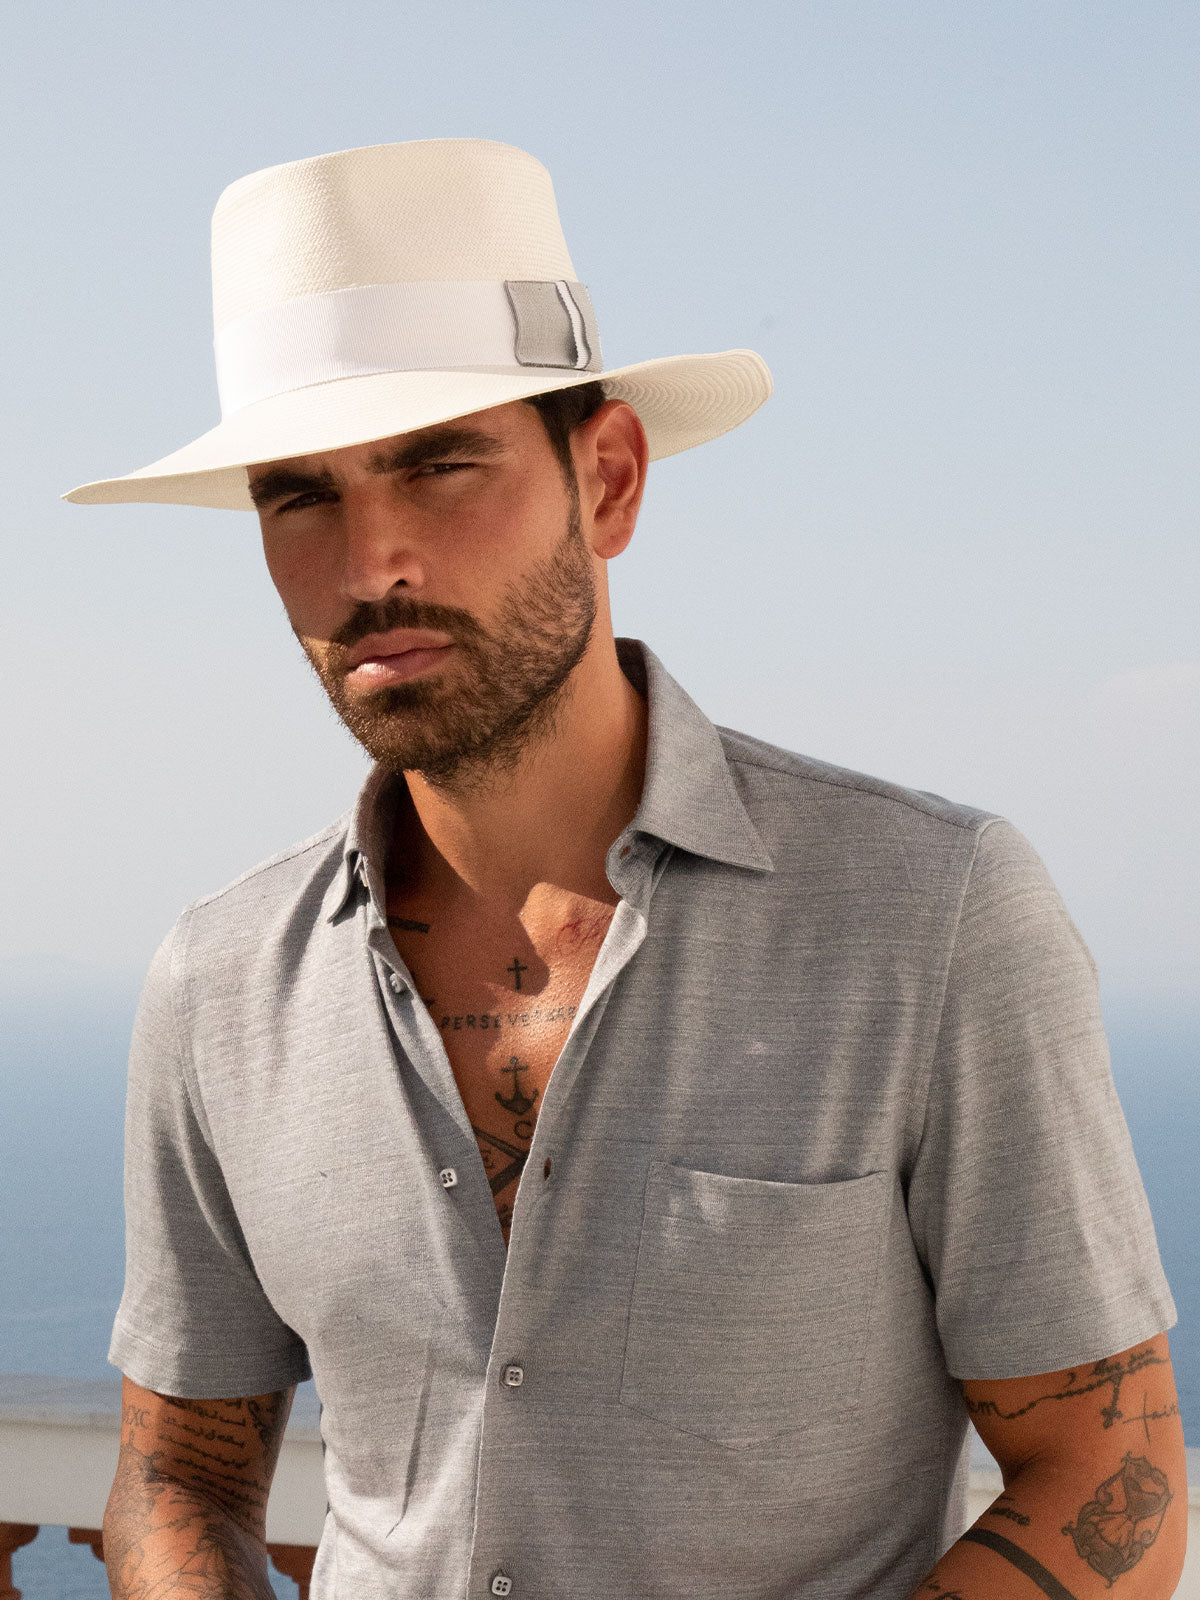 Panama Man 100% Capri grey and white straw hat worn by model